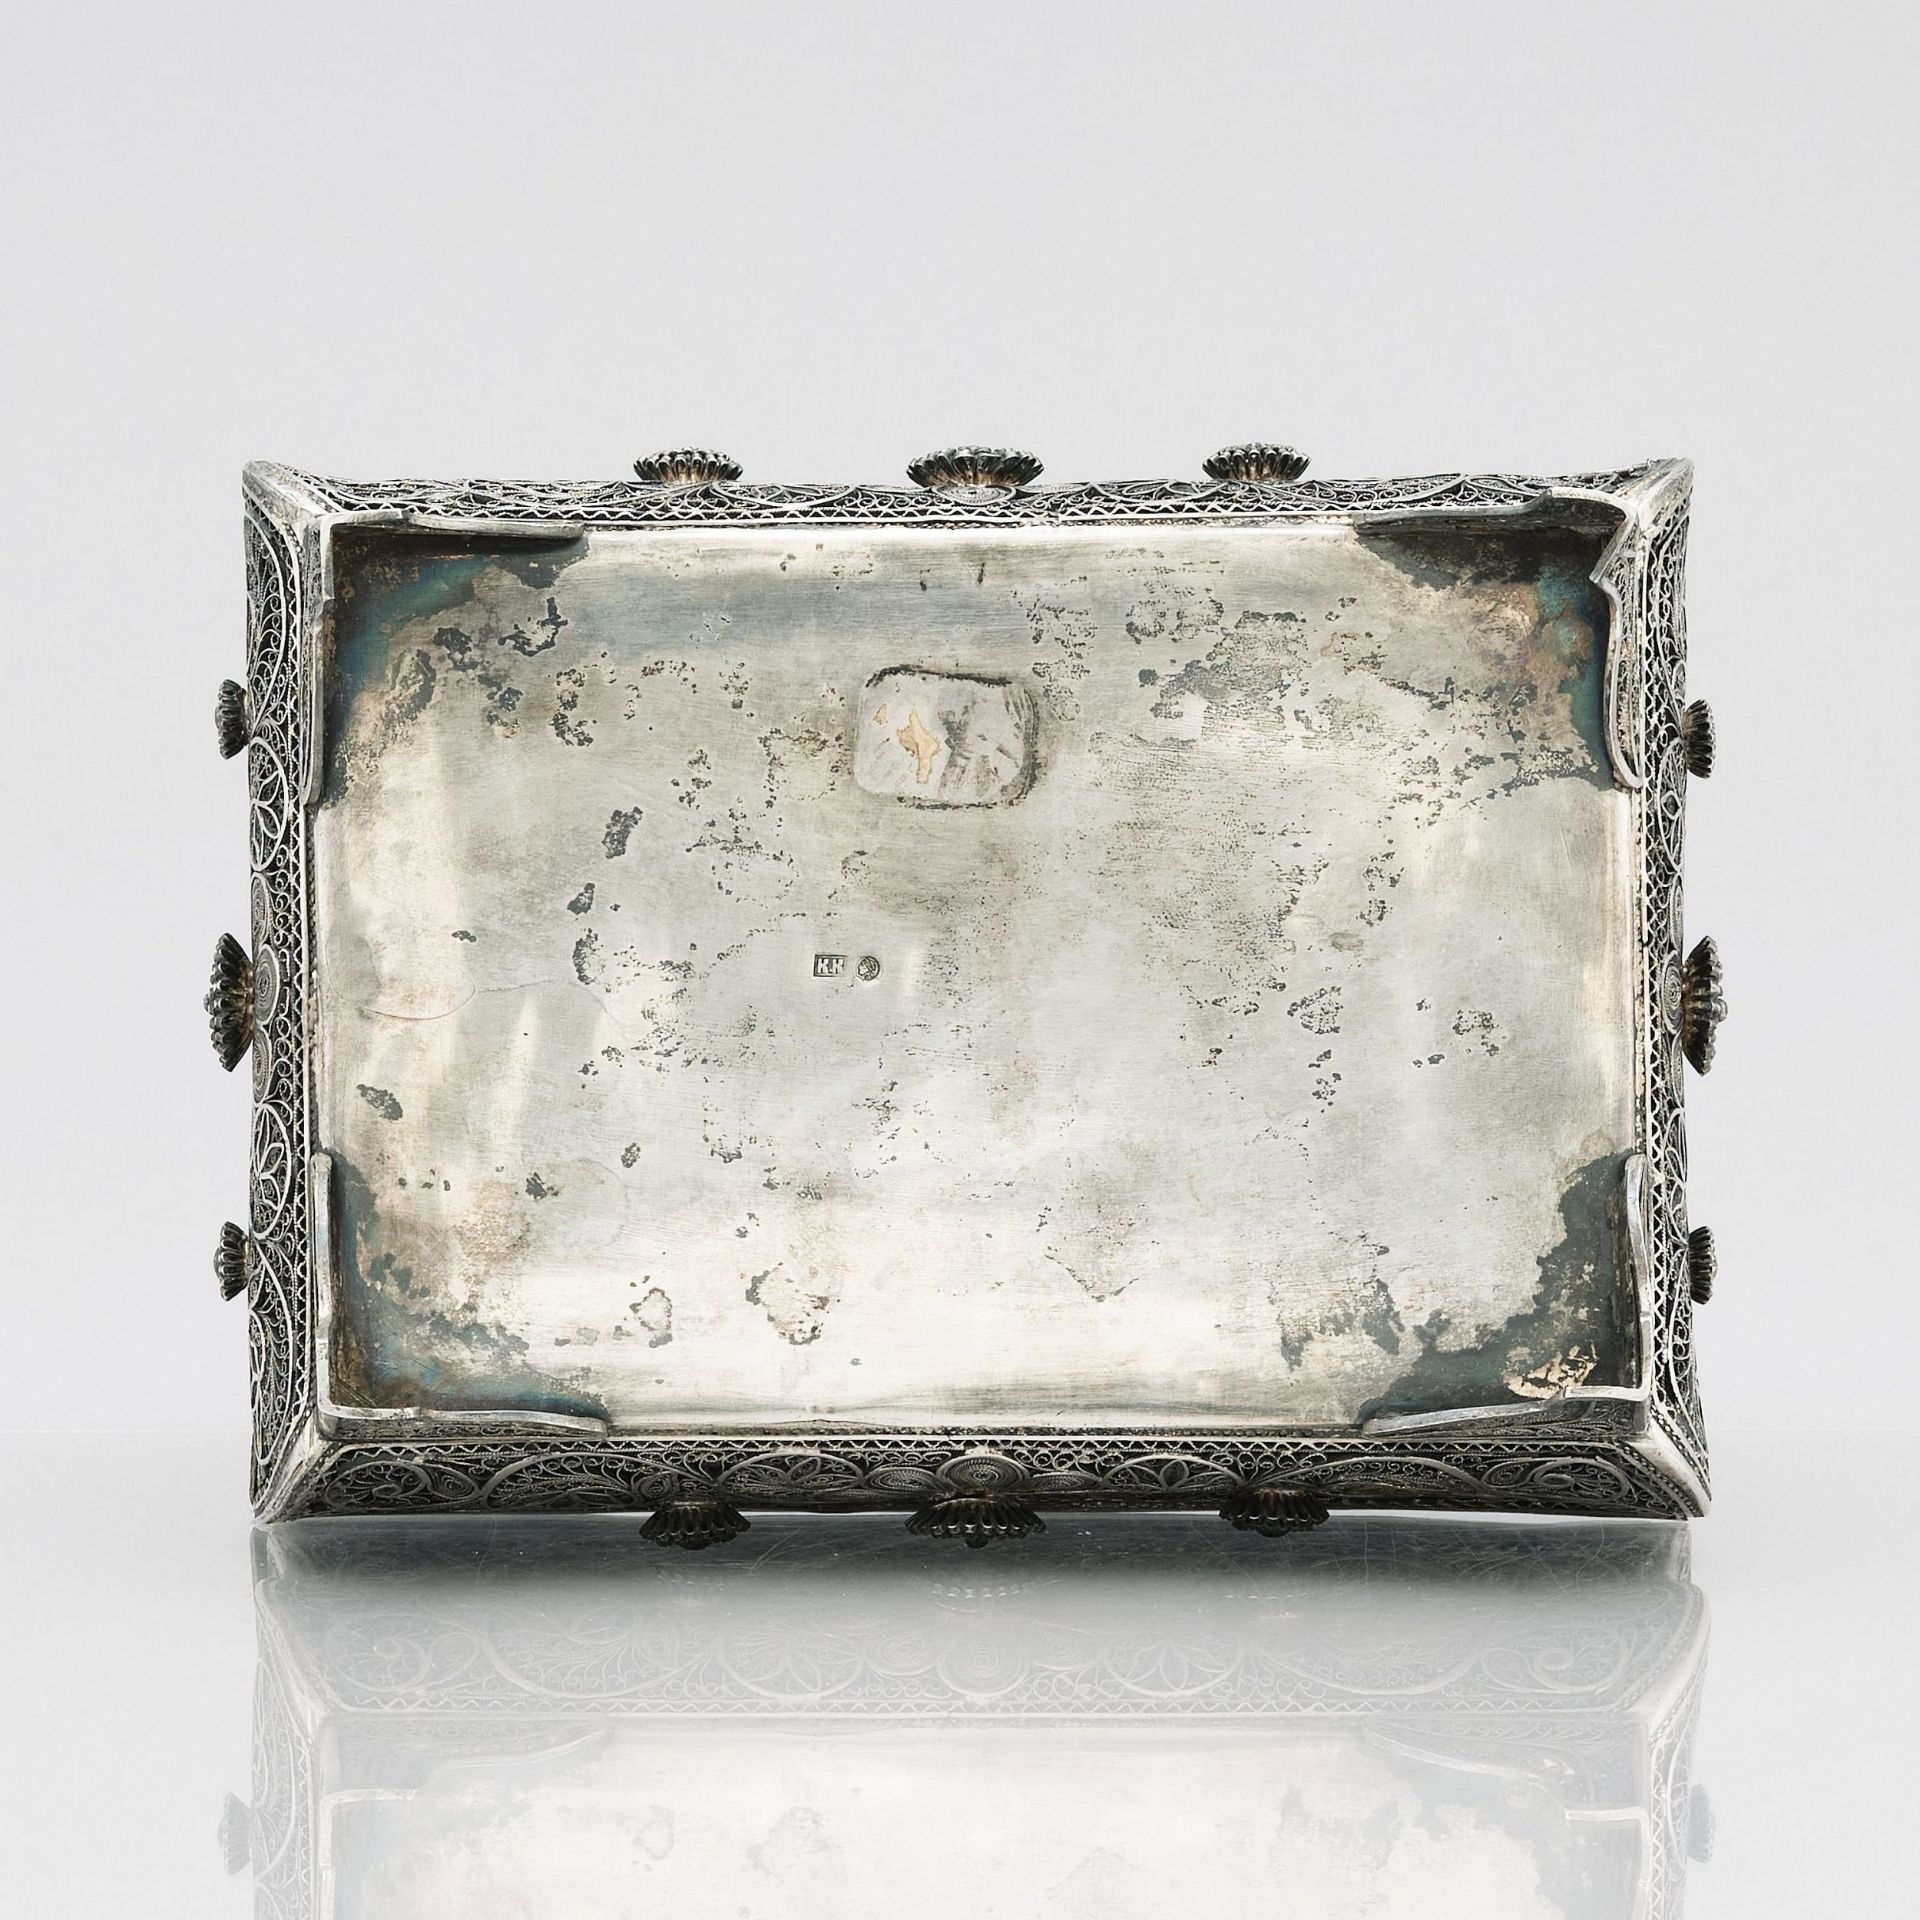 Silver filigree box from the 19th century. Odessa, Russian Empire, 1898-1908 - Image 2 of 7